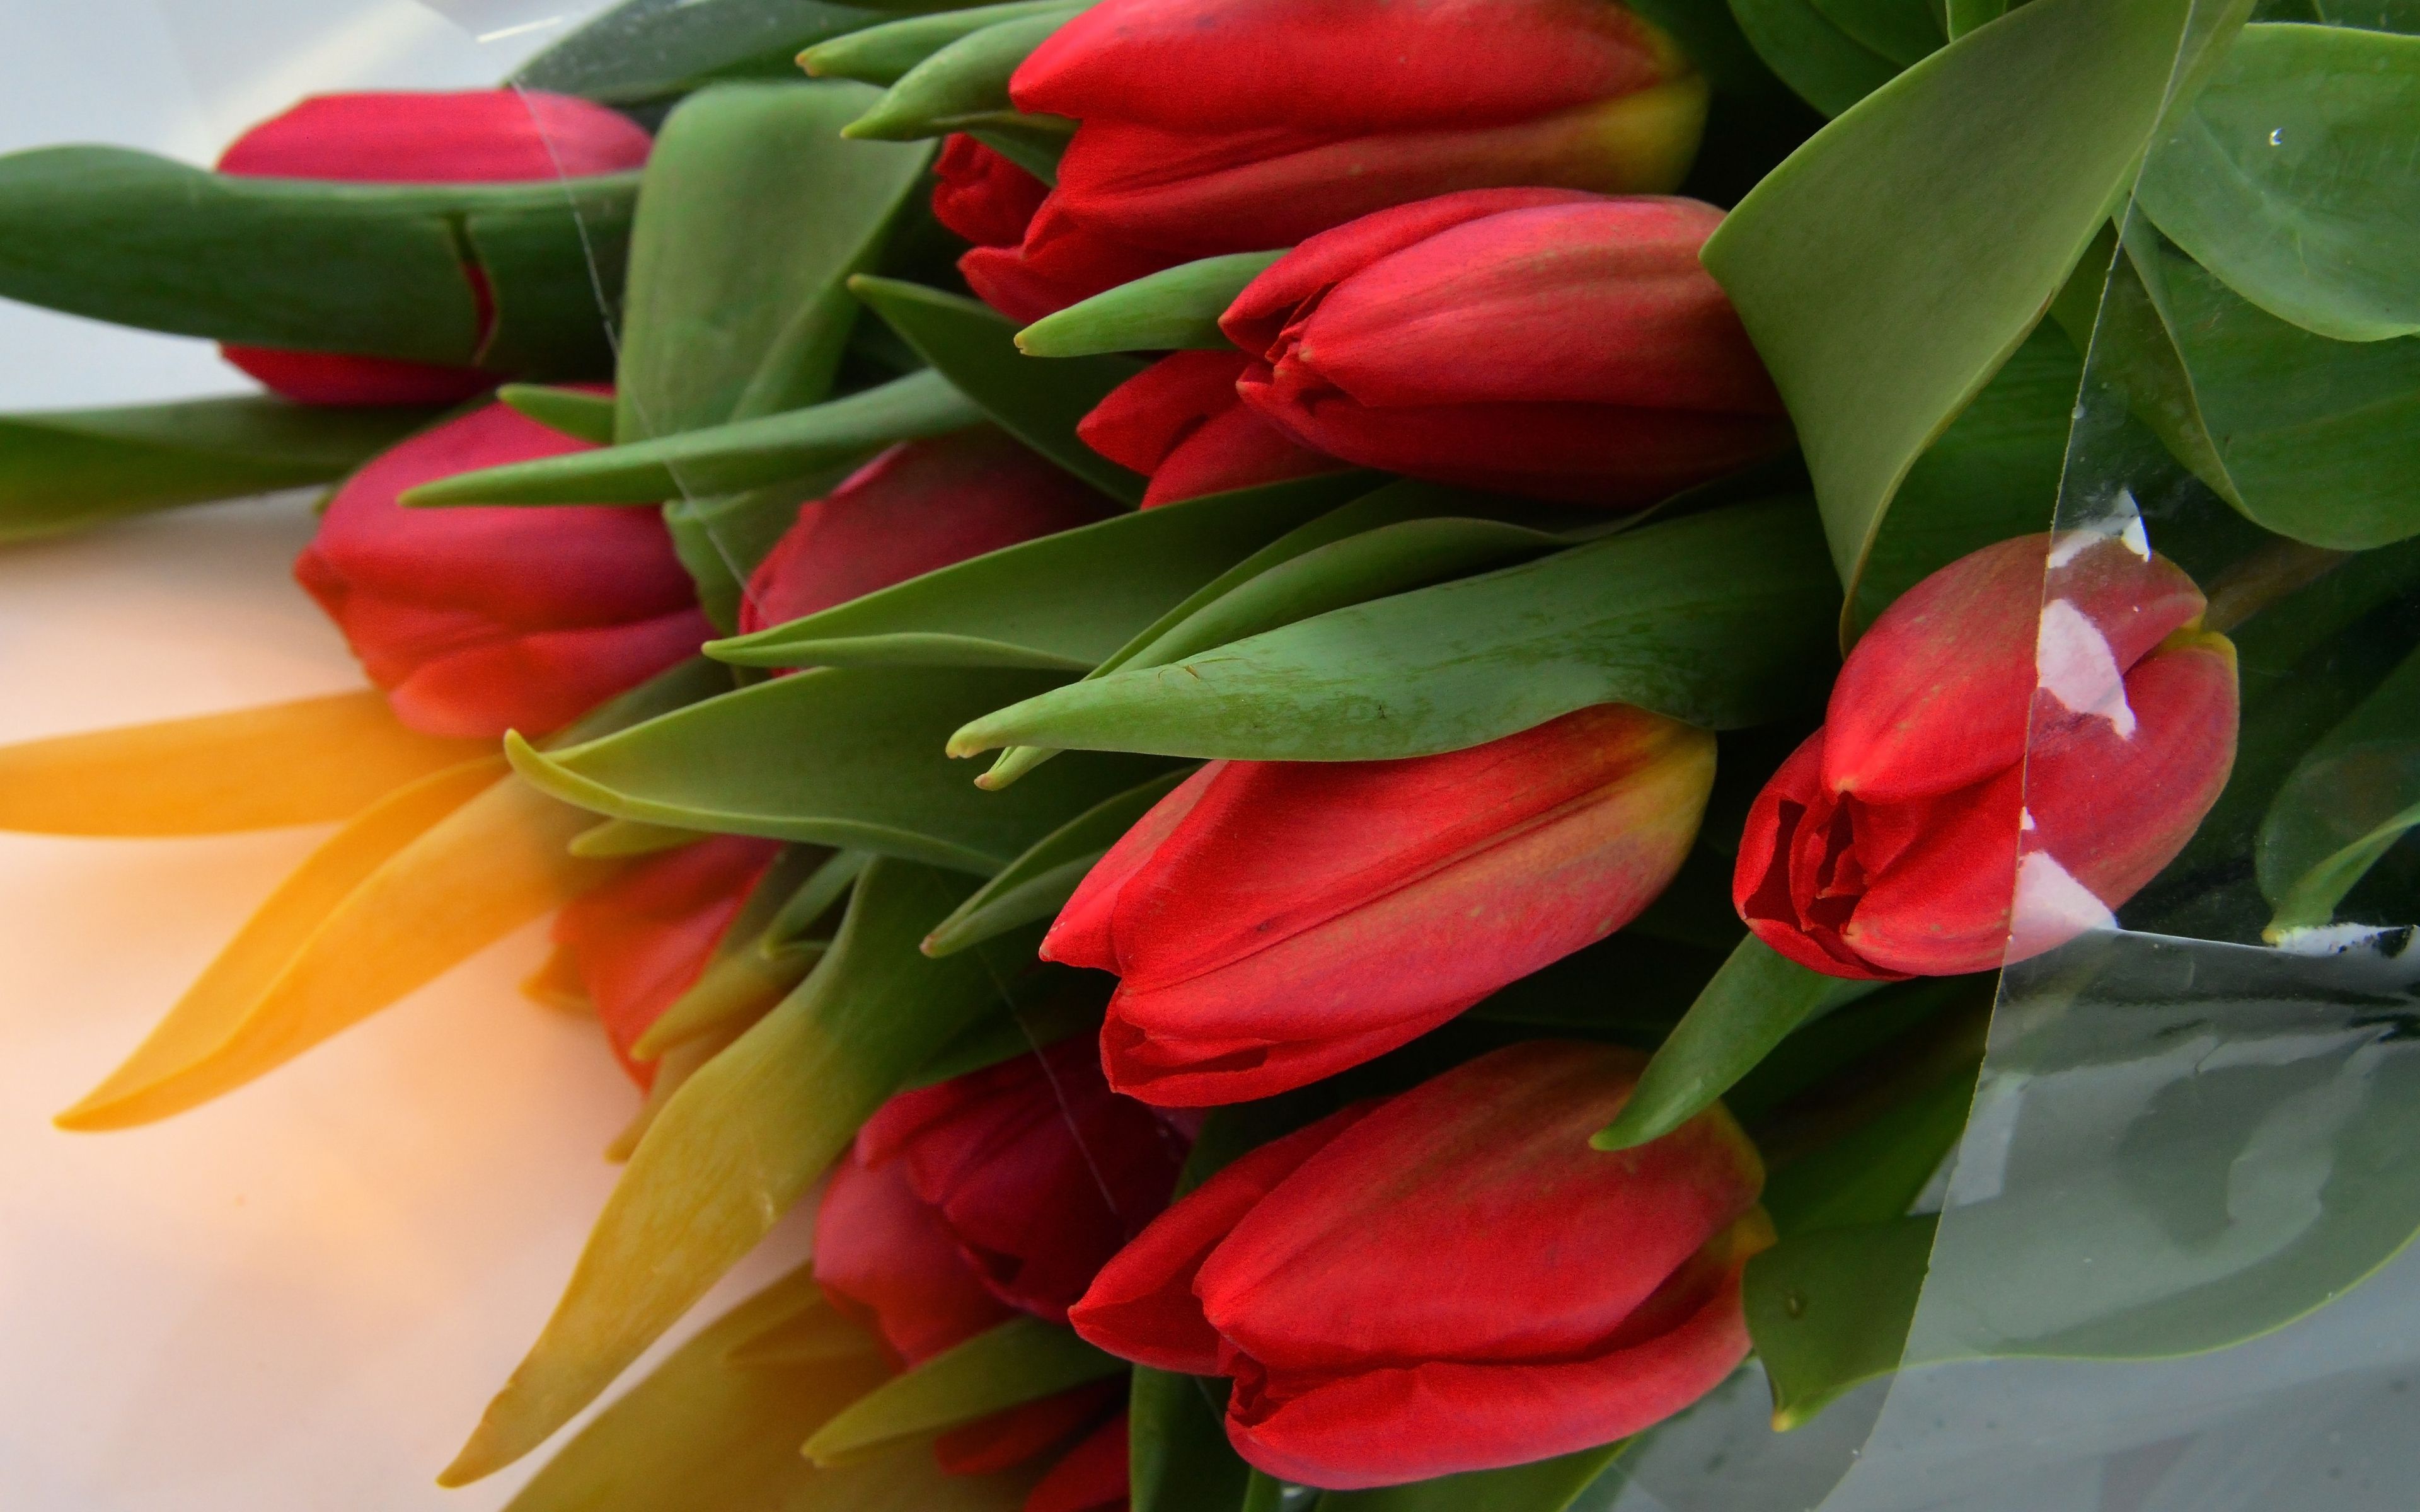 Download 3840x2400 wallpaper red tulip, flowers, fresh, 4k, ultra HD 16: widescreen, 3840x2400 HD image, background, 3893